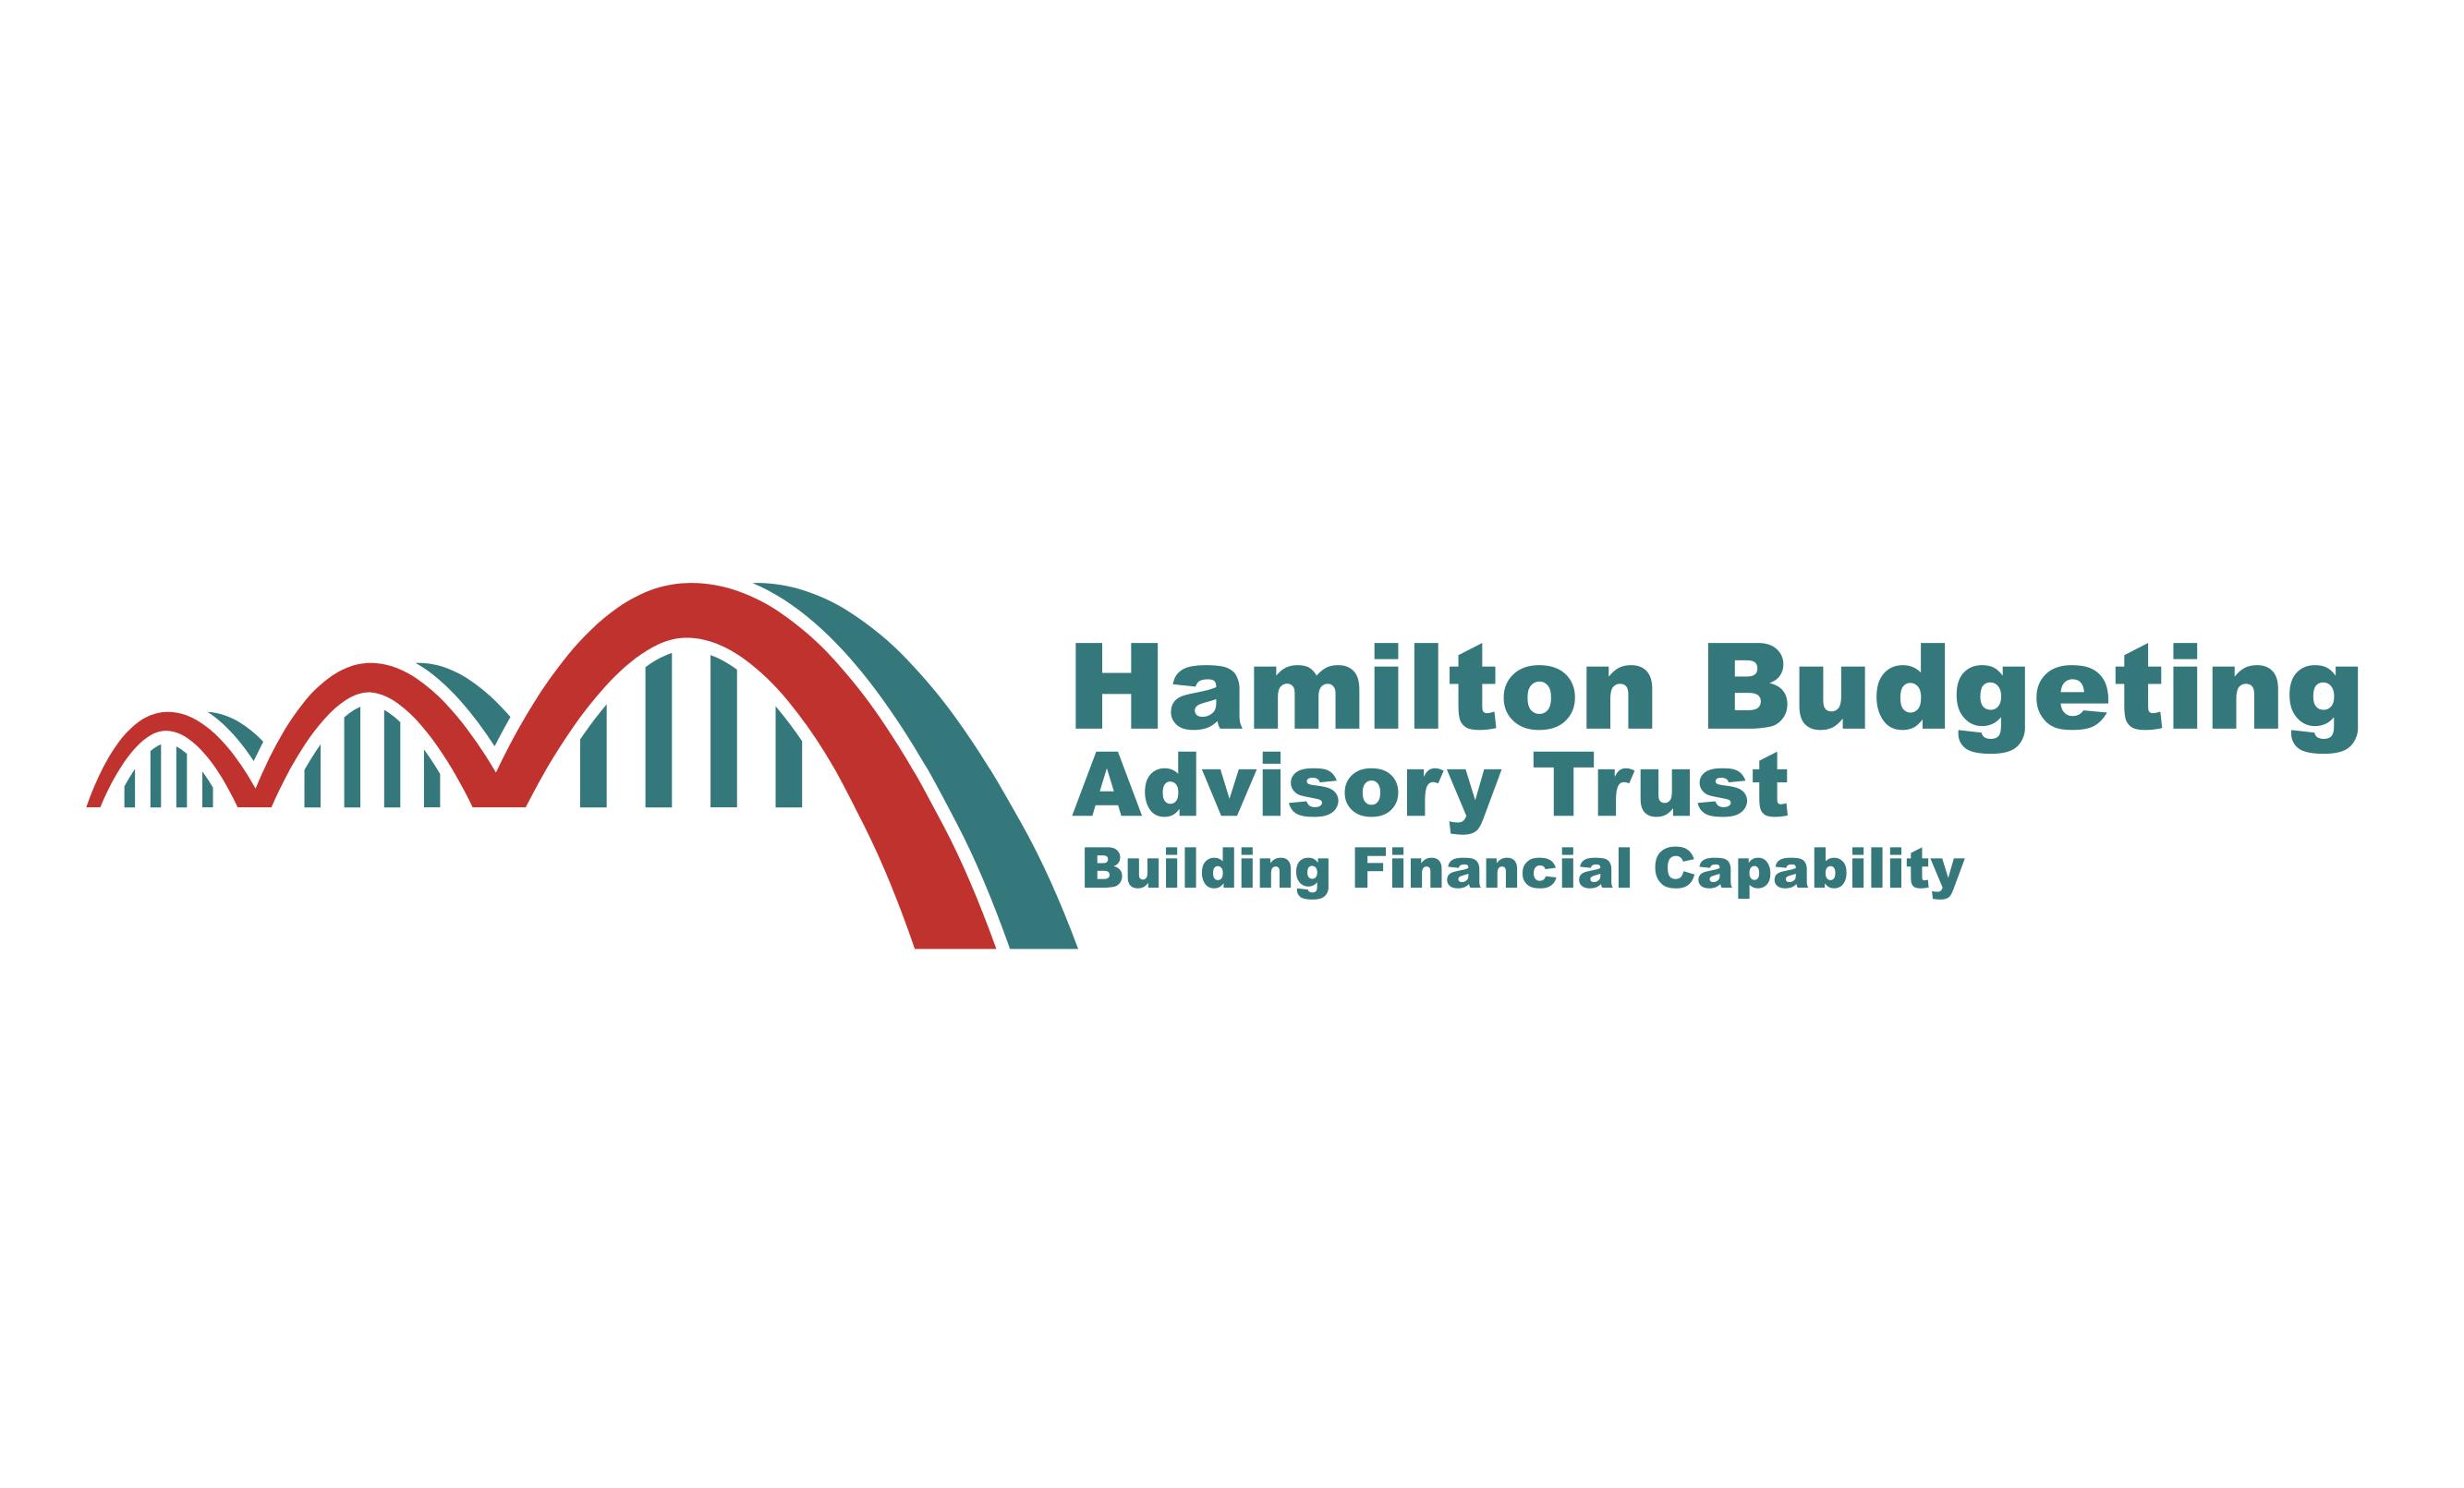 Hamilton Budgeting Advisory Trust